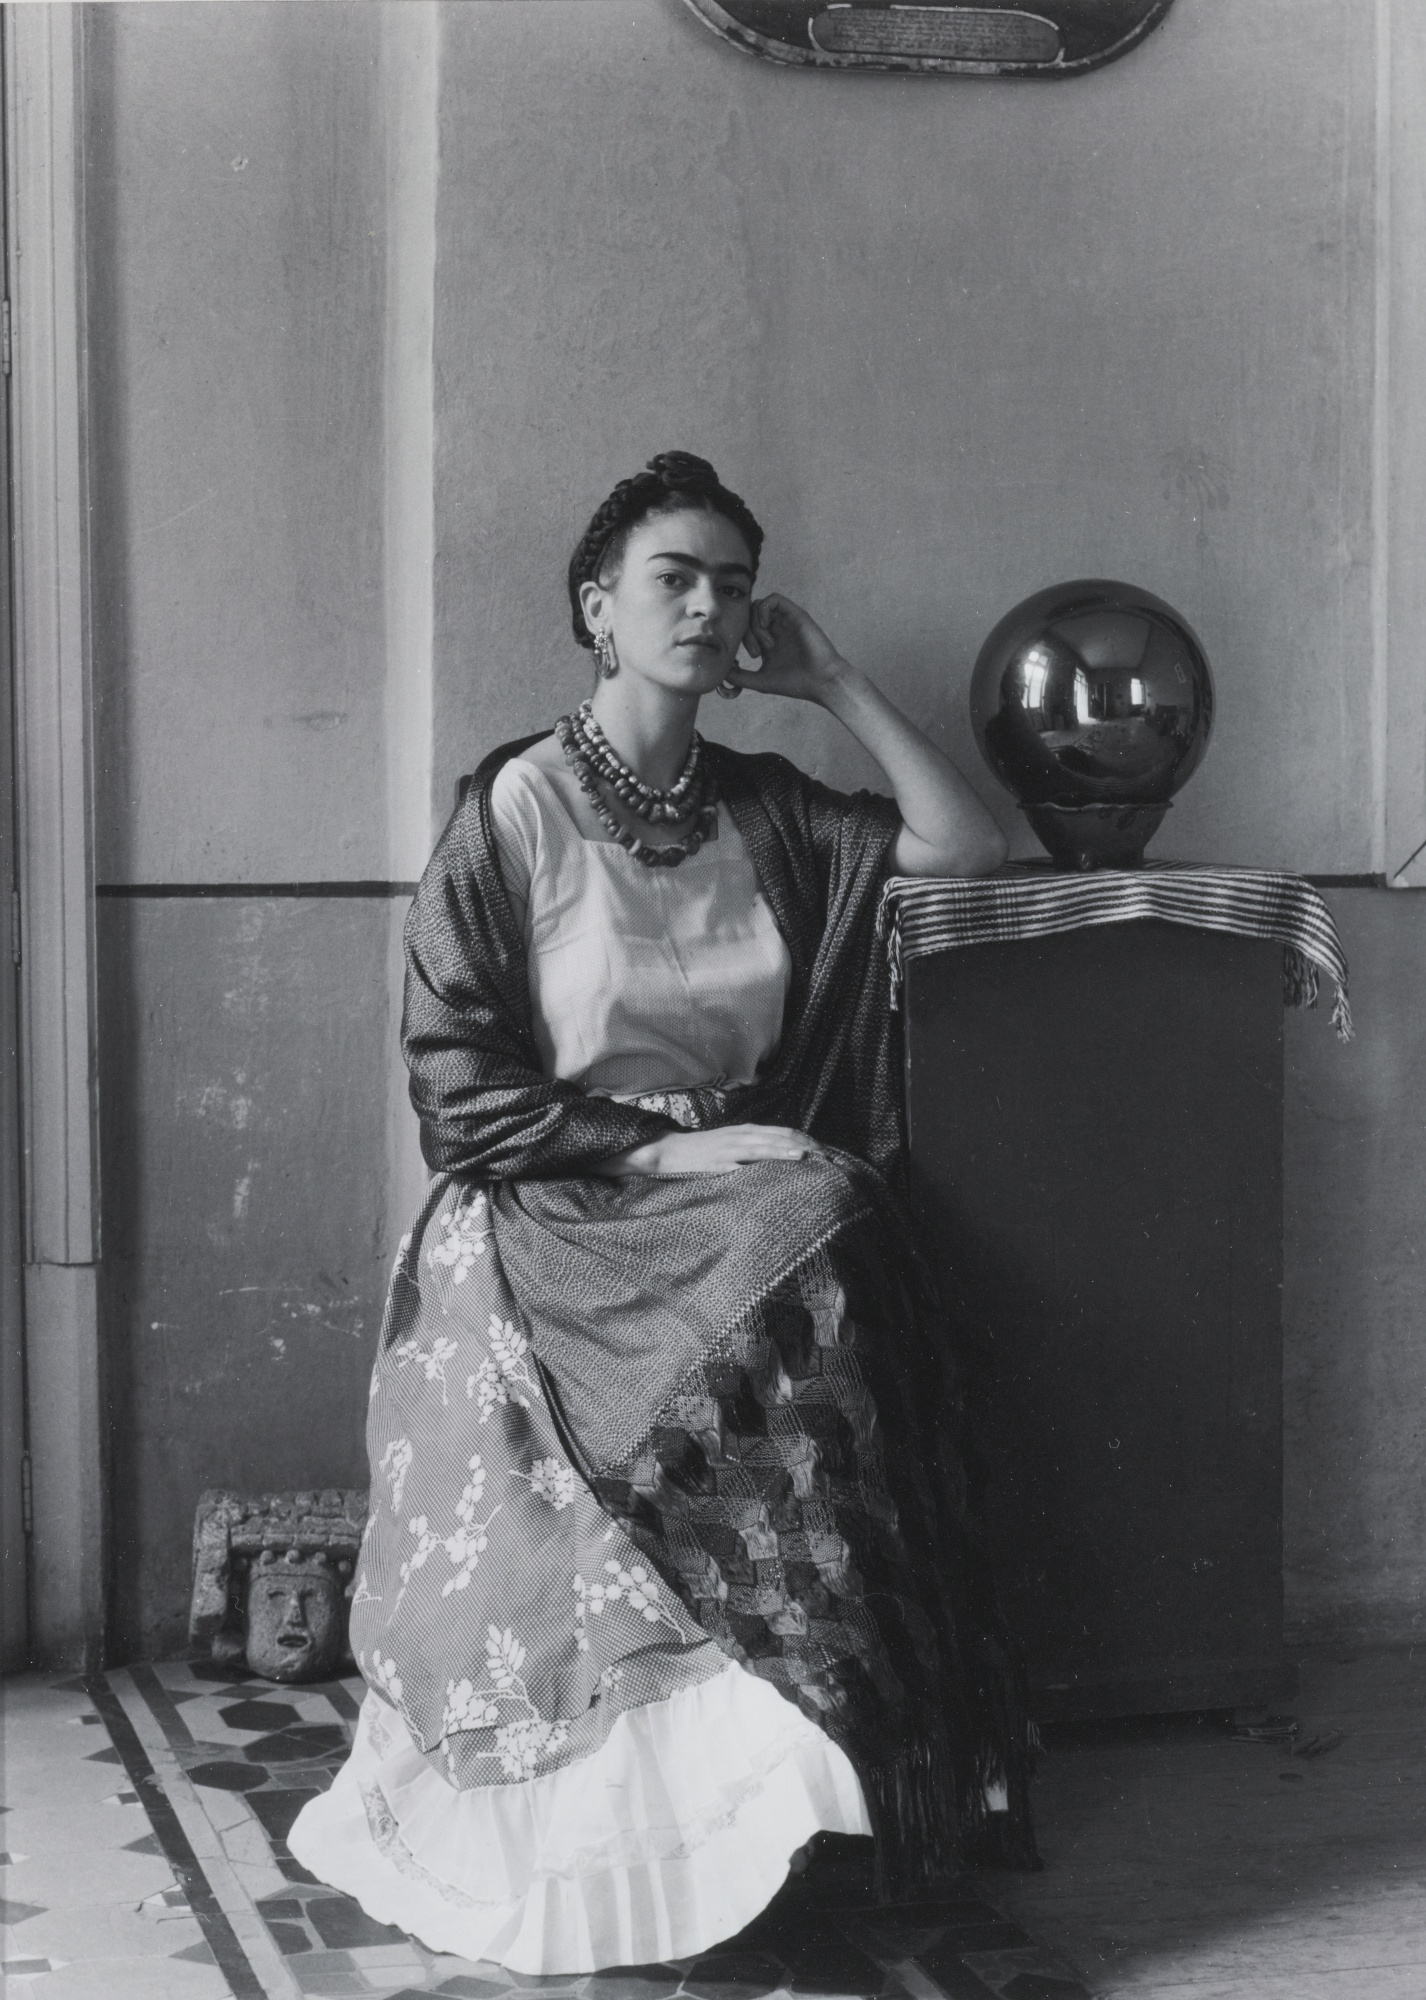 Frida Kahlo & Crystal Ball by Manuel Alvarez Bravo